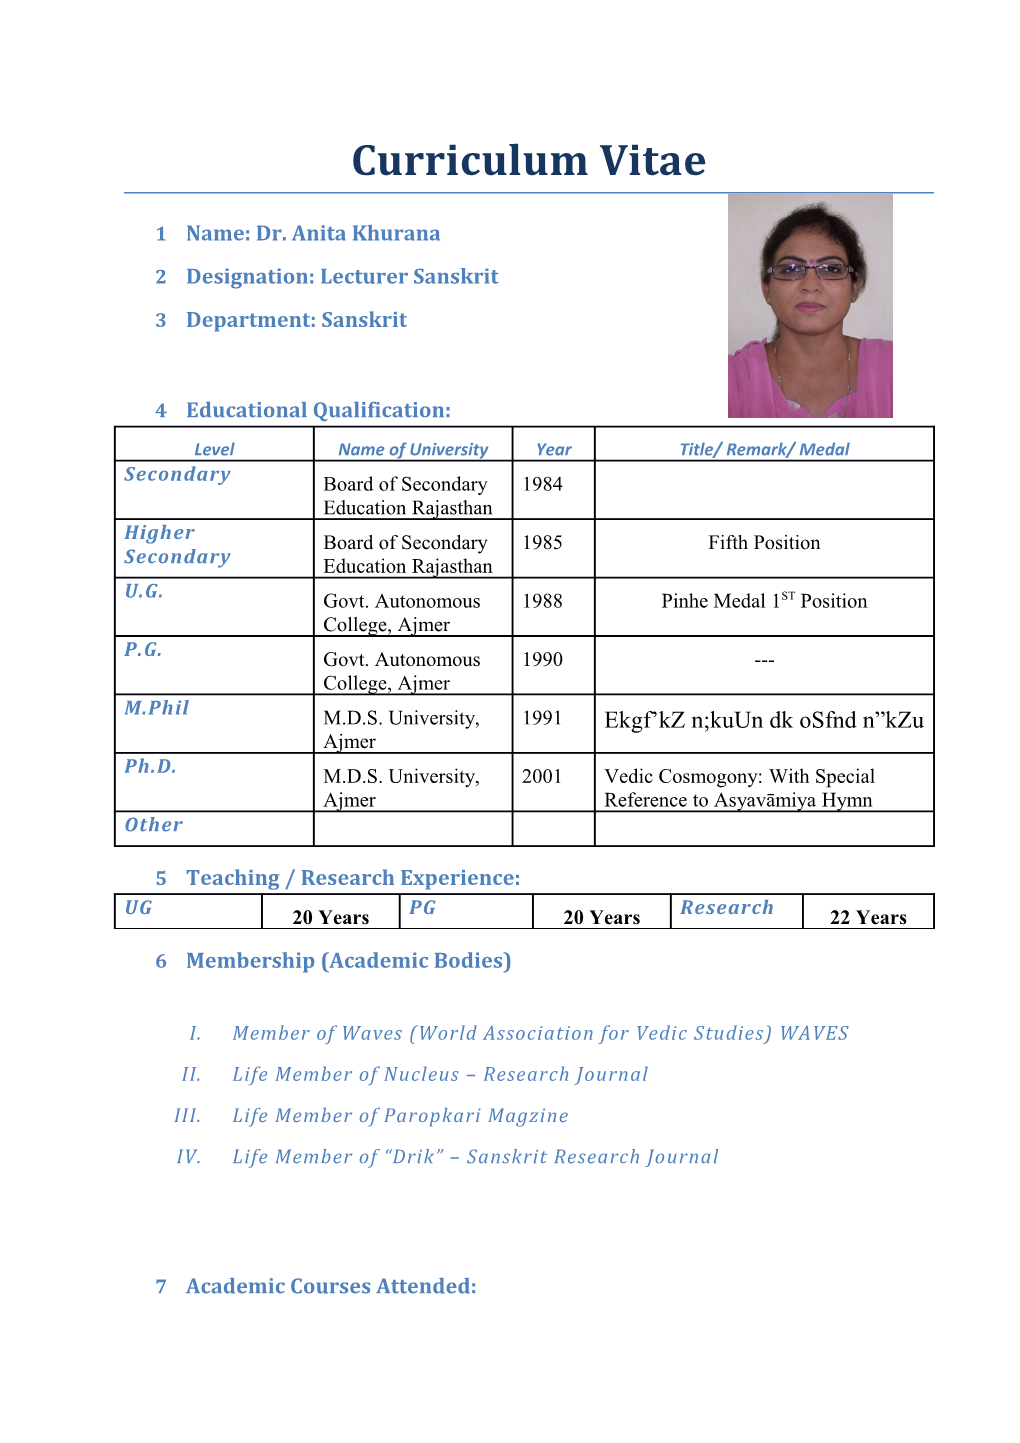 1Name: Dr.Anita Khurana